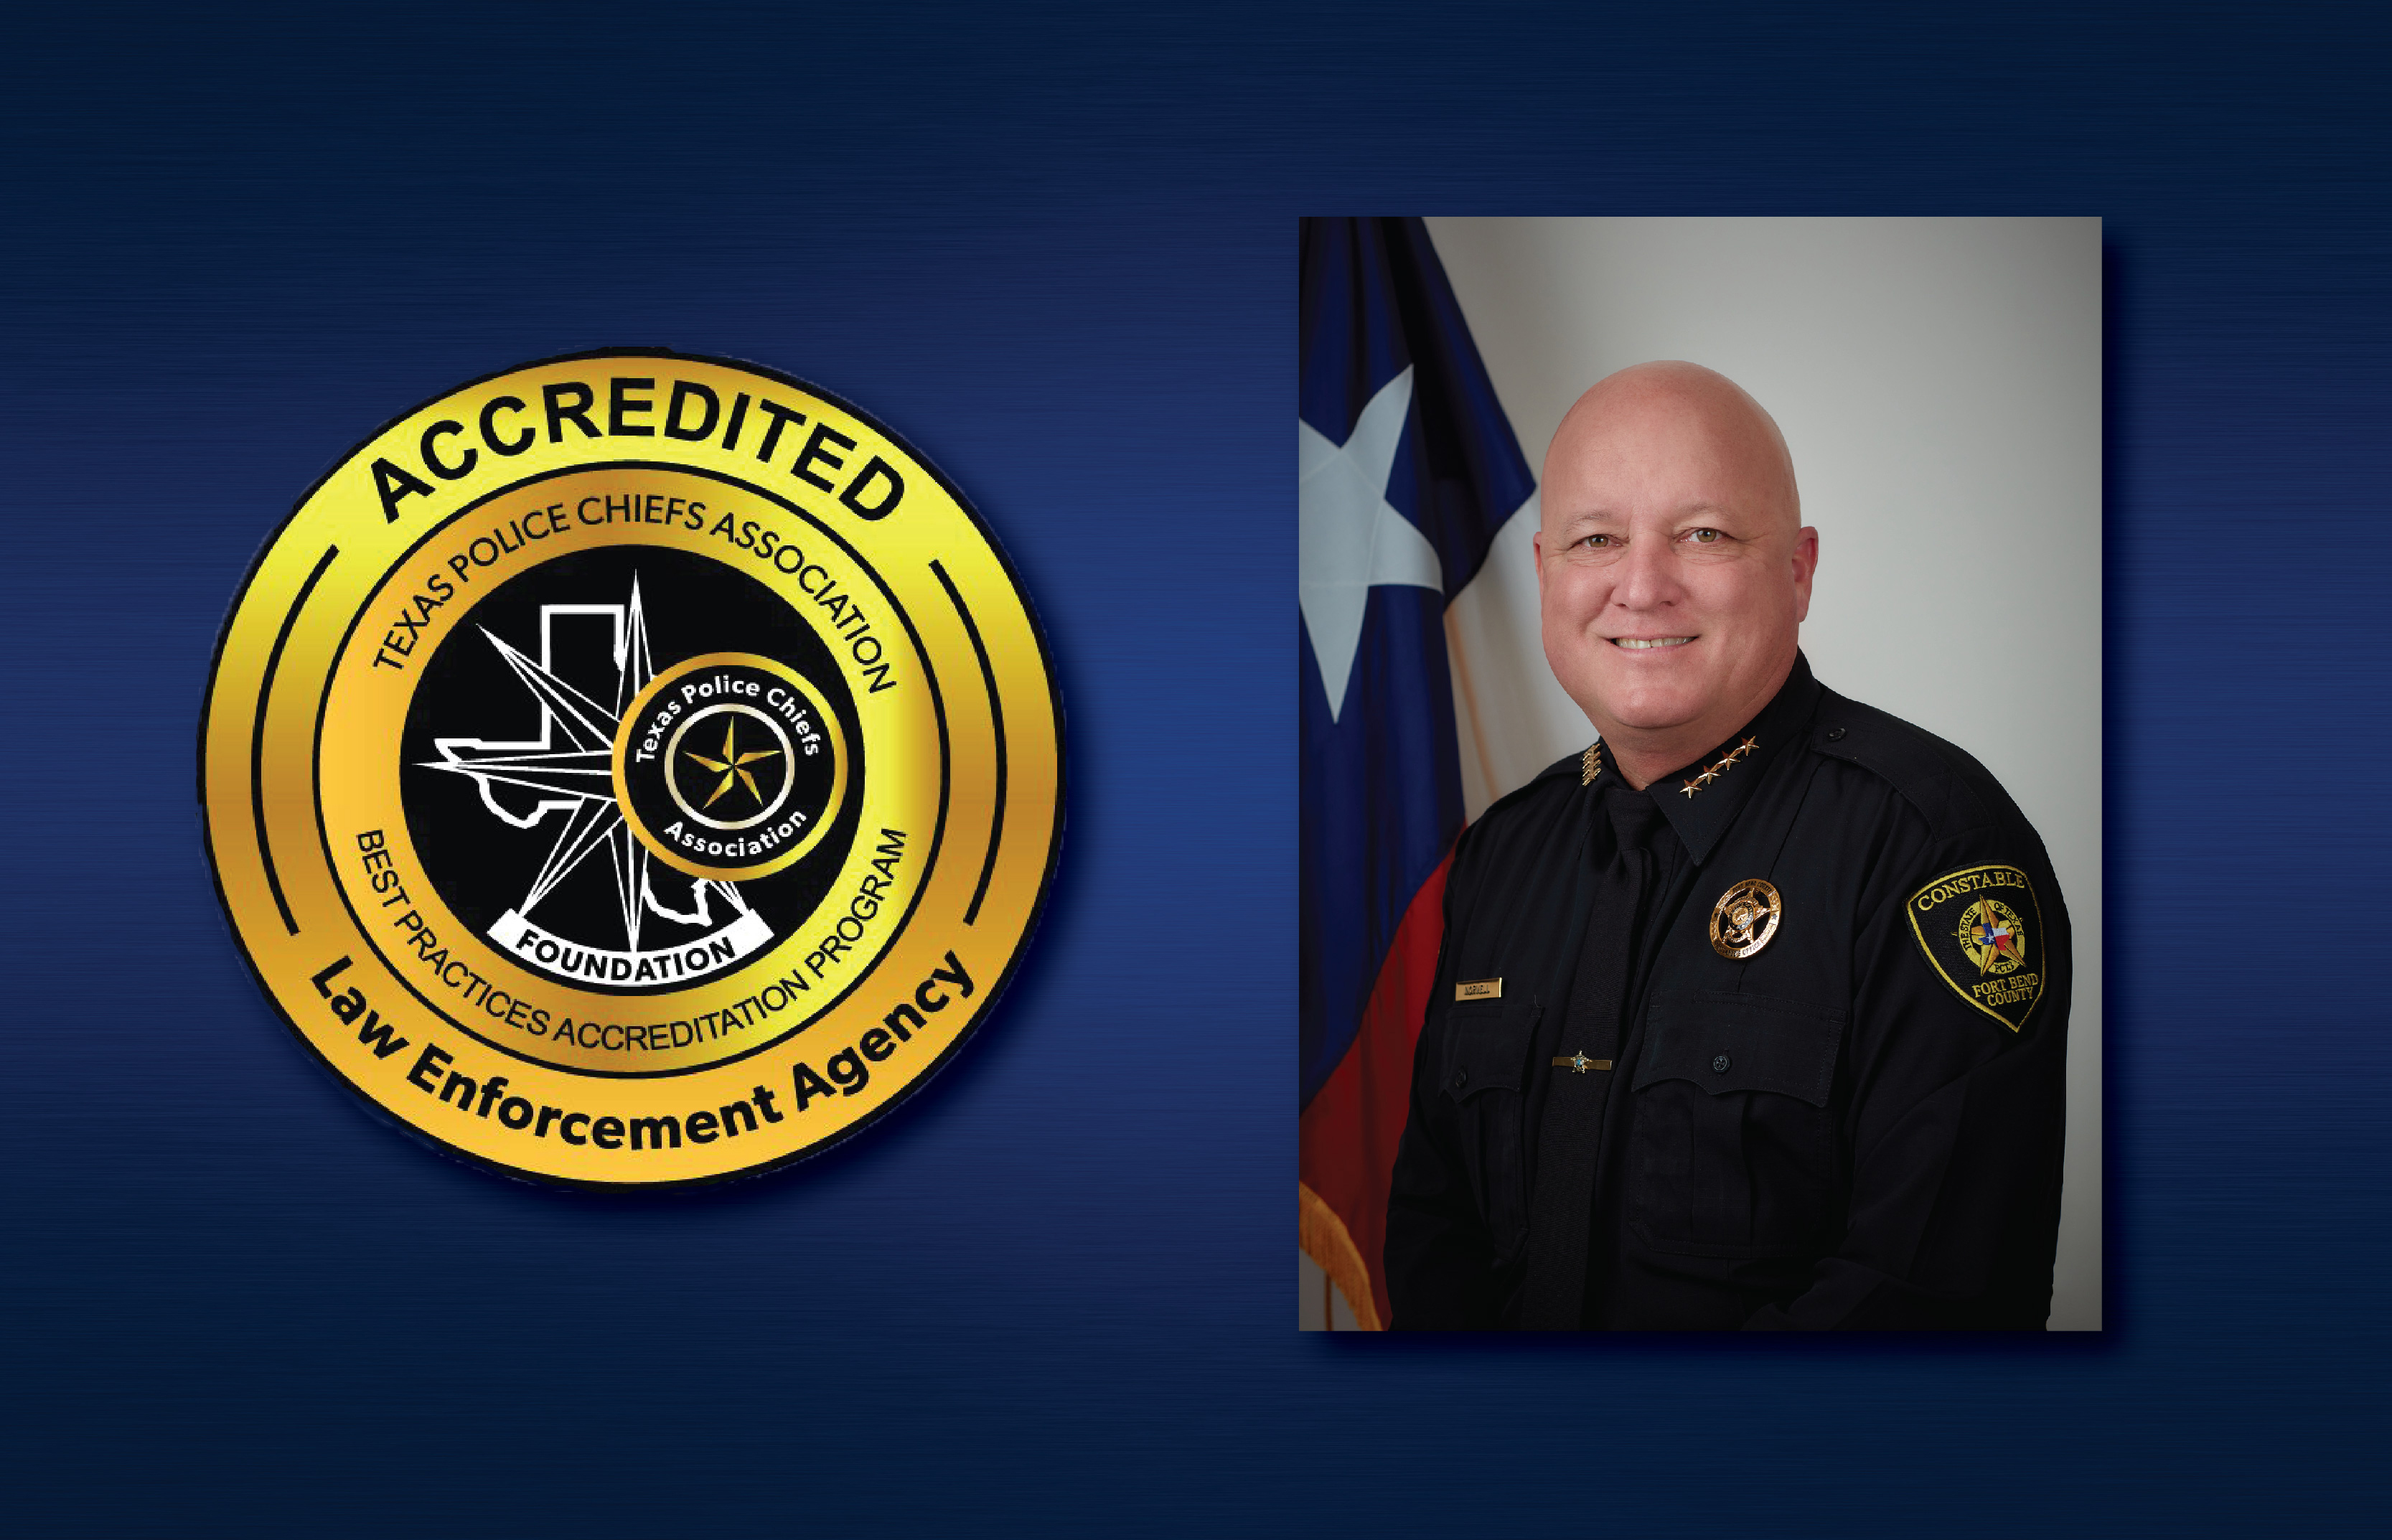 Fort Bend County Precinct 1 Constable’s Office Achieves Prestigious “Accredited Law Enforcement Agency” Designation